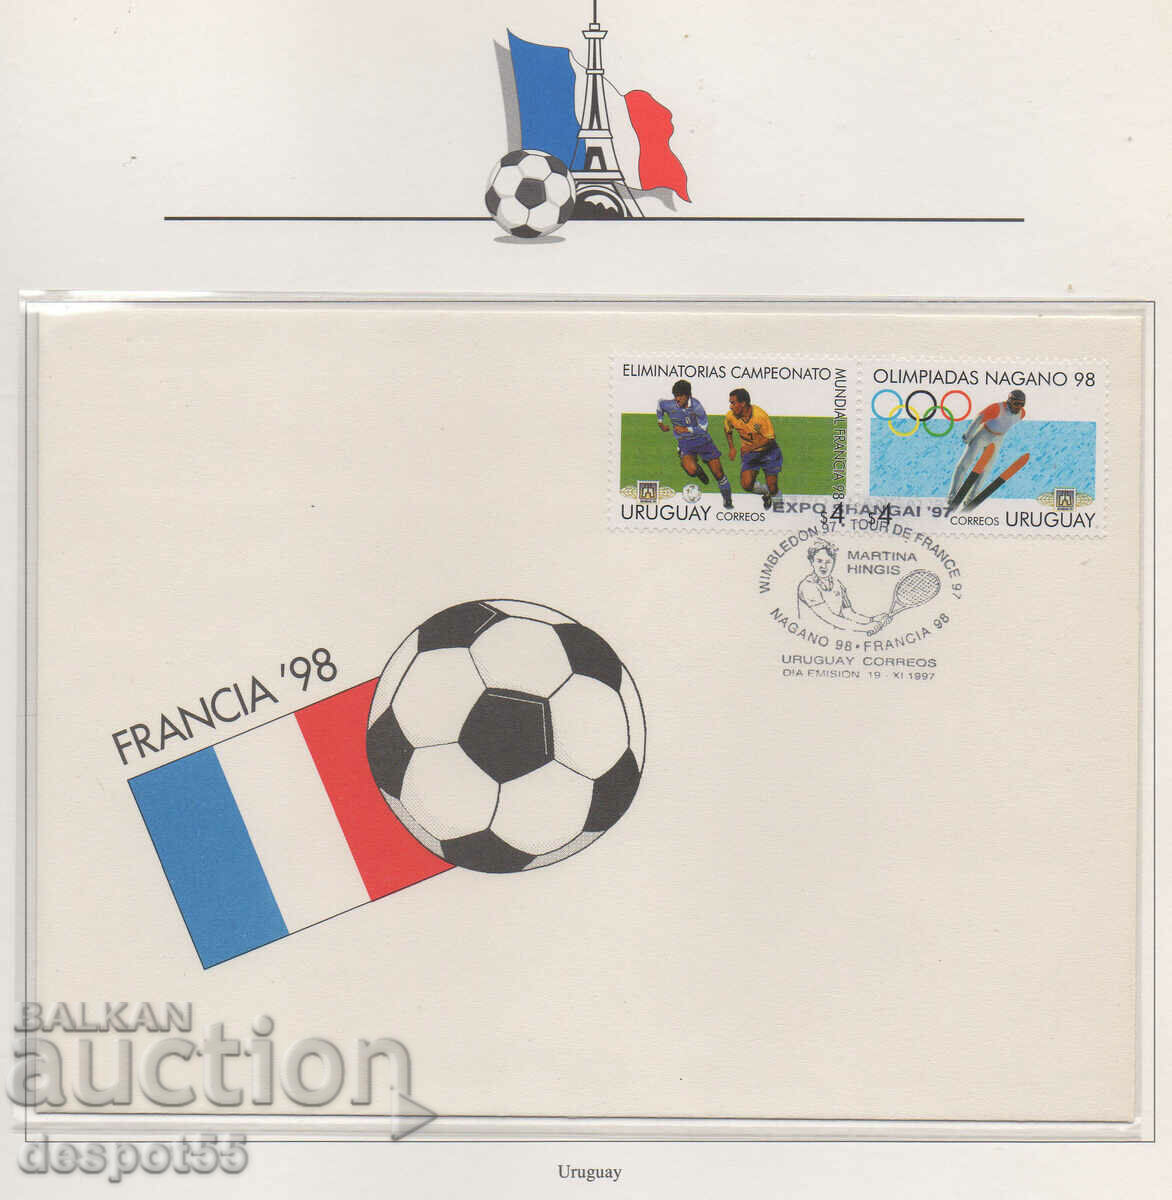 1997. Uruguay. Major sporting events. An envelope.